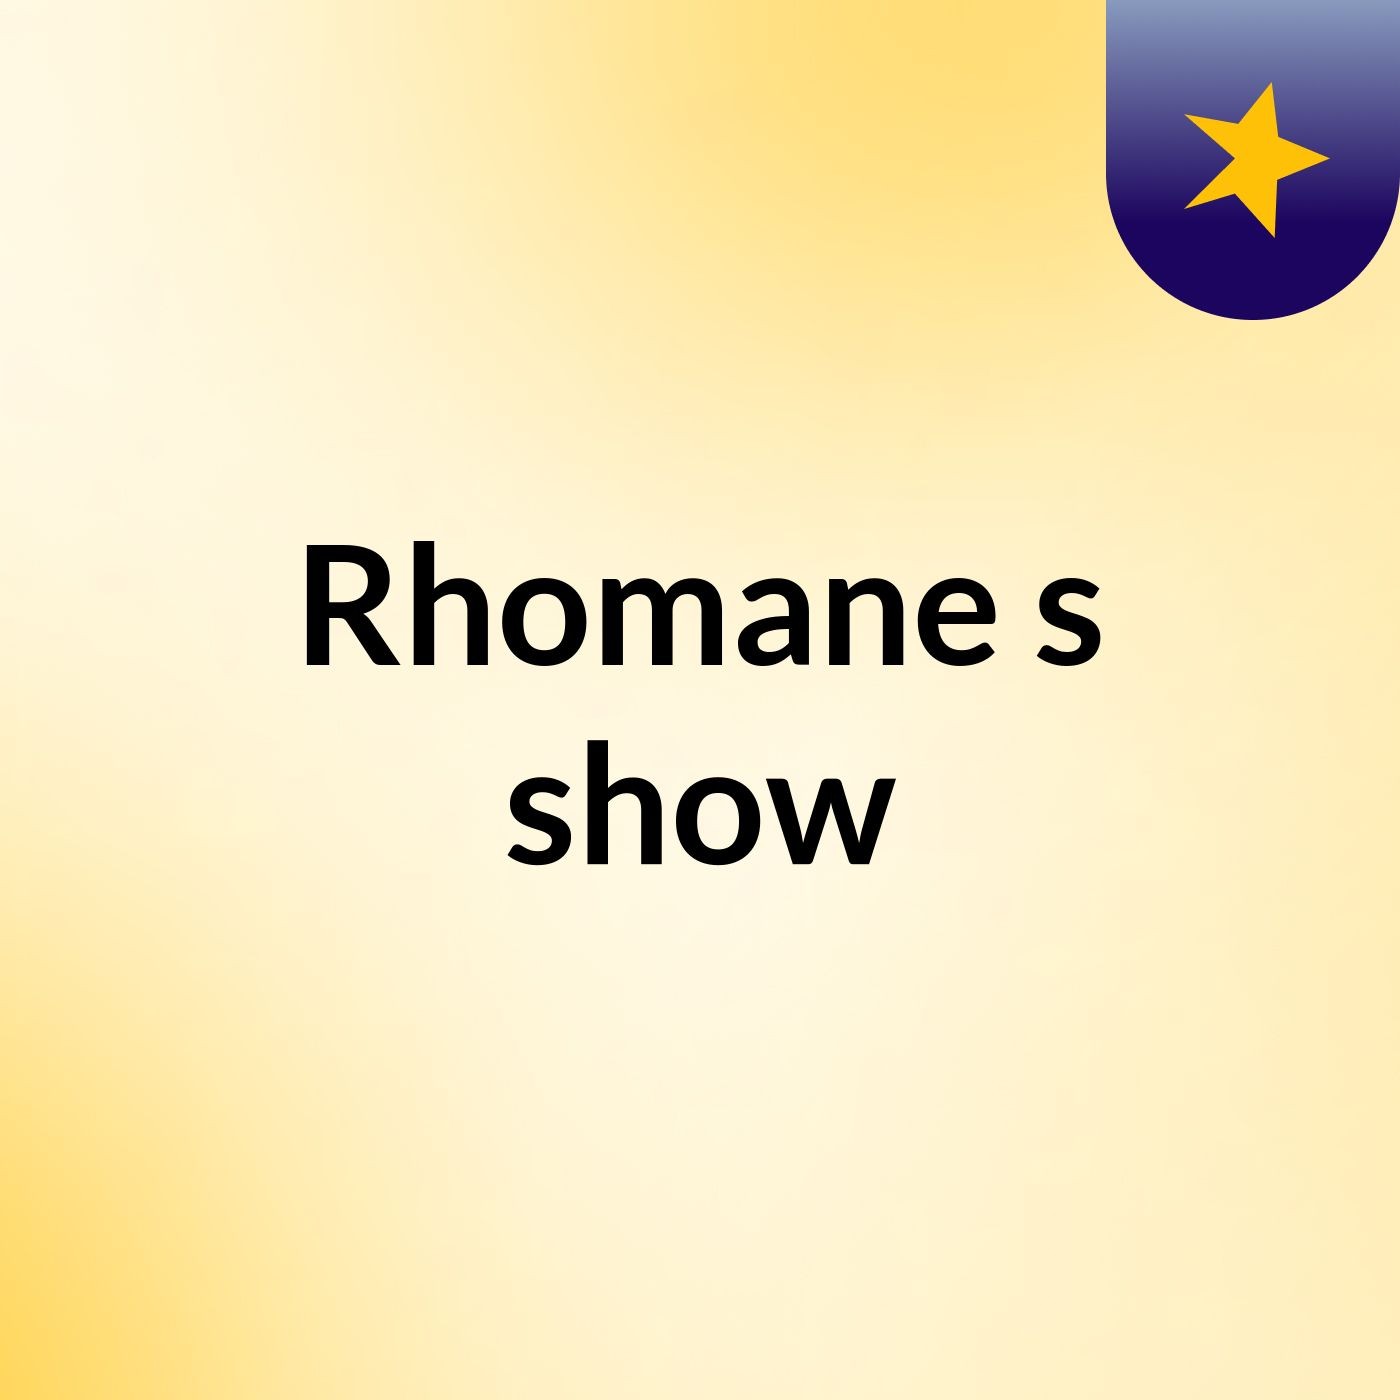 Rhomane's show